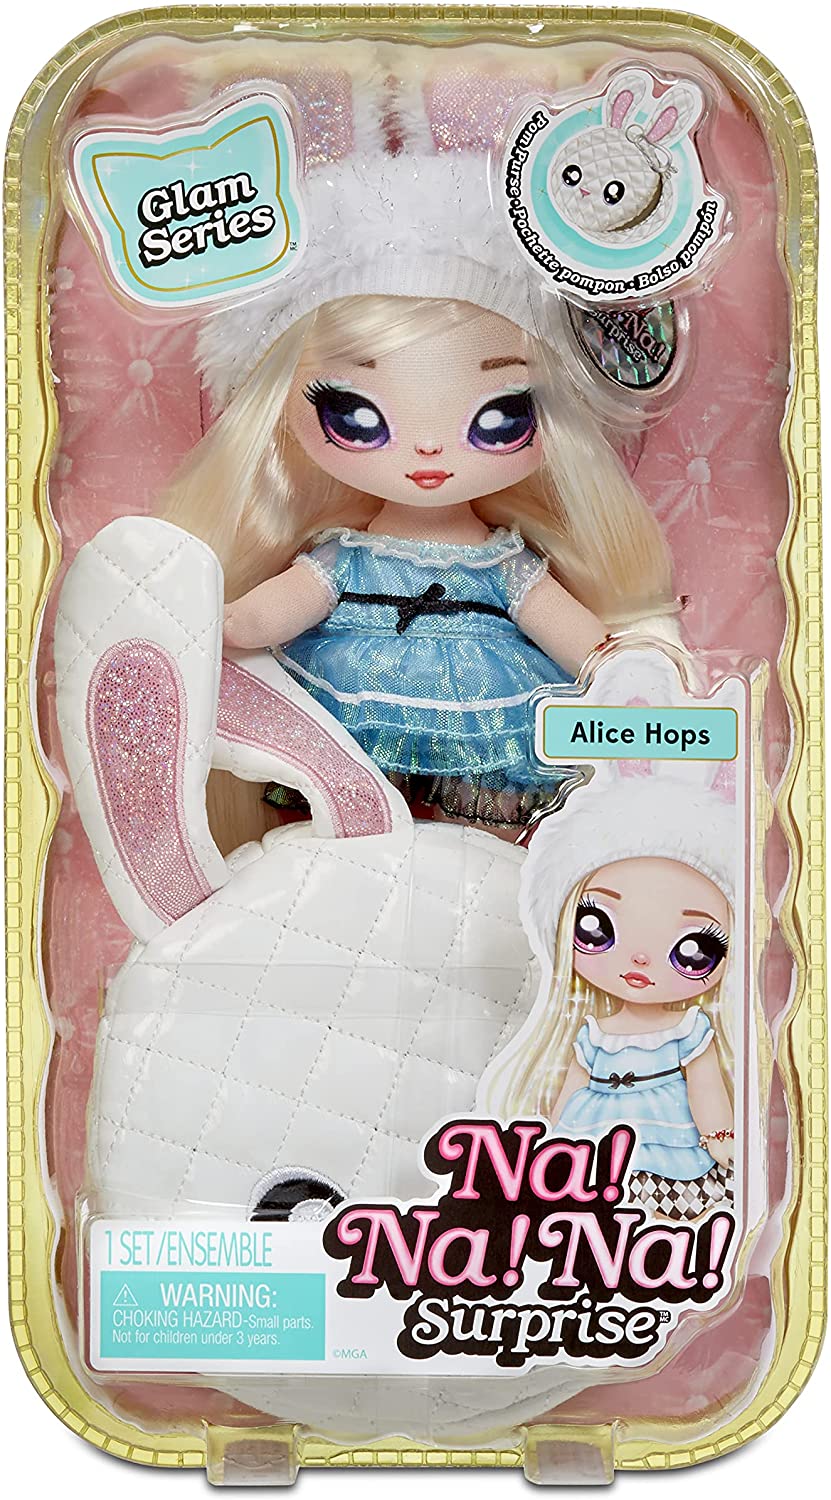 Na Na Na Surprise Glam Series doll Alice Hops